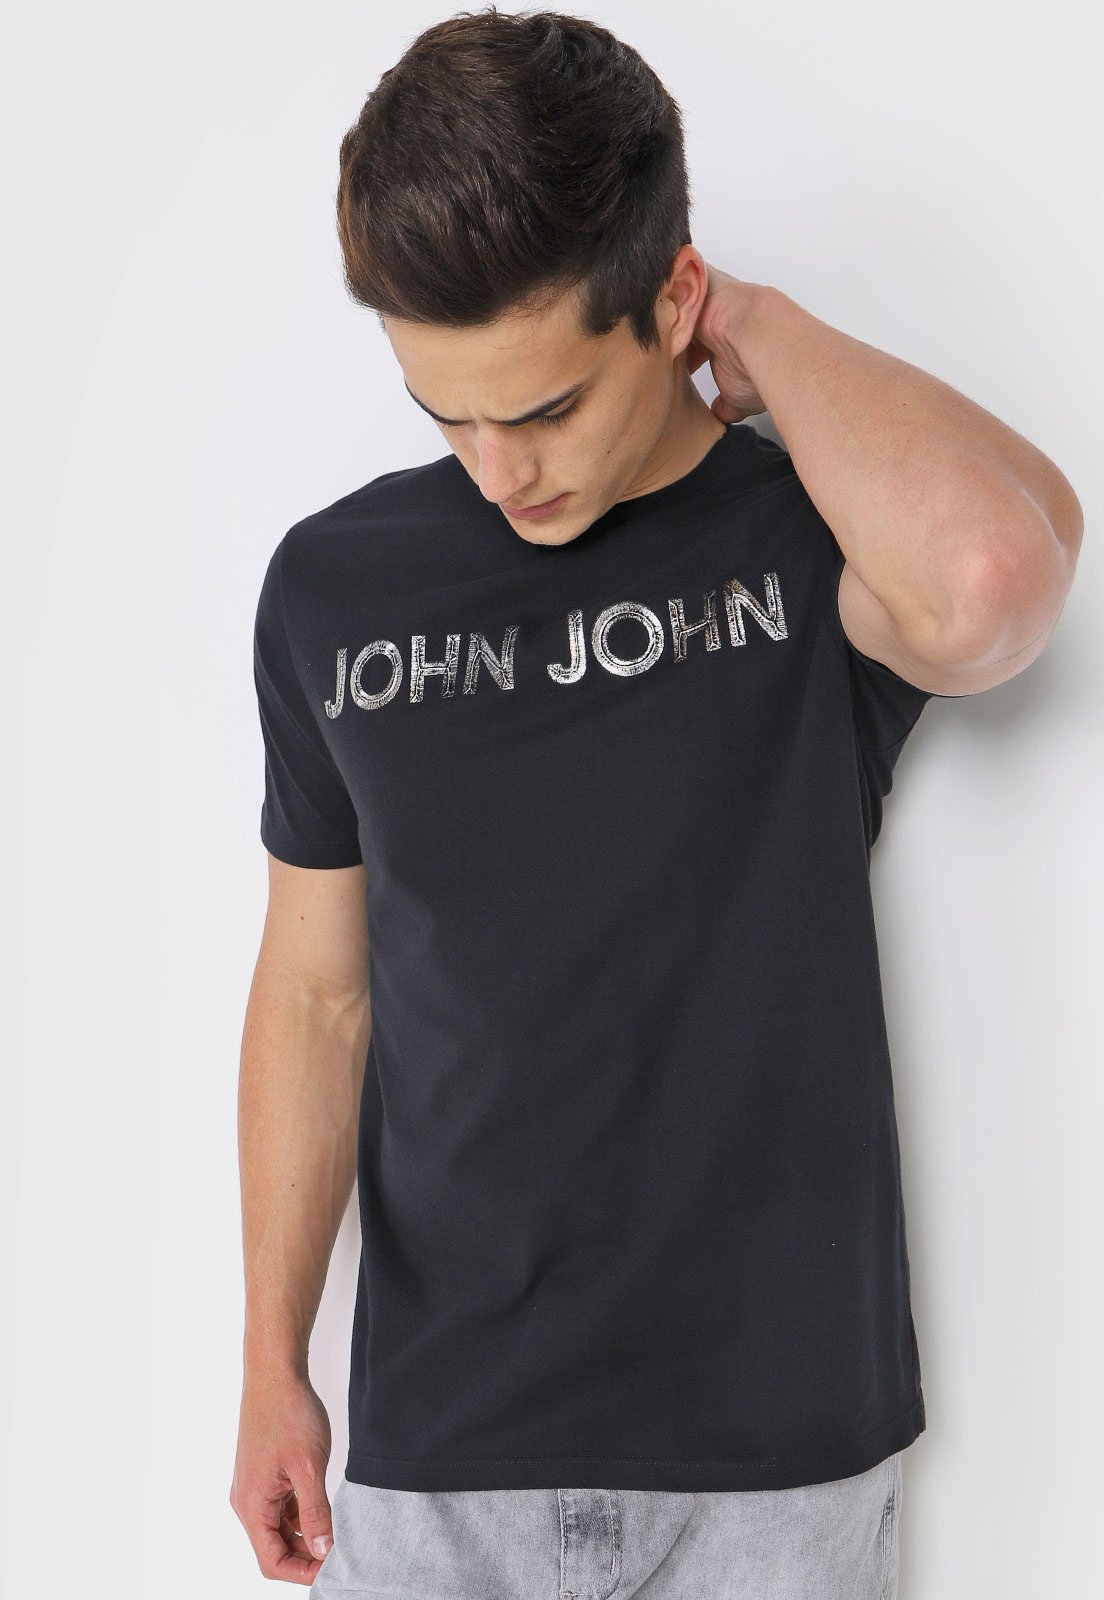 https://static.dafiti.com.br/p/John-John-Camiseta-John-John-Logo-Metal-Preta-2287-3858537-1-zoom.jpg